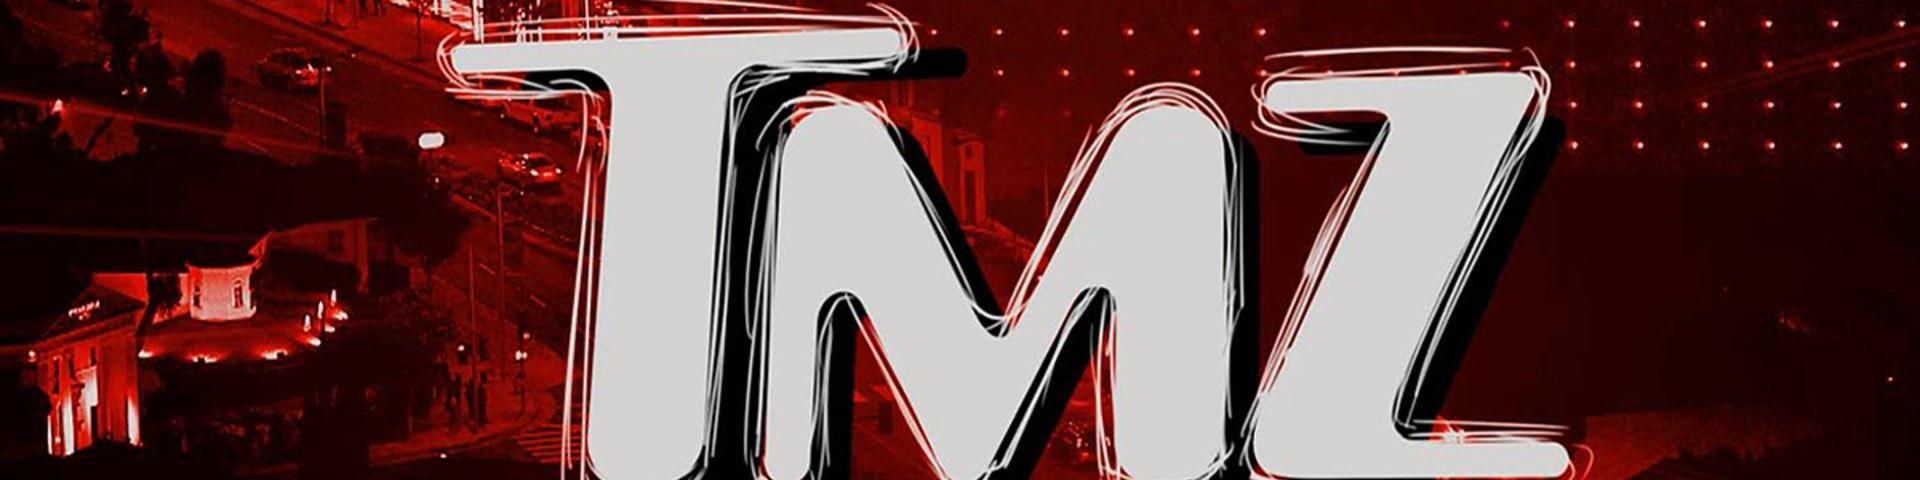 TMZ Logo - WarnerBros.com | TMZ | TV